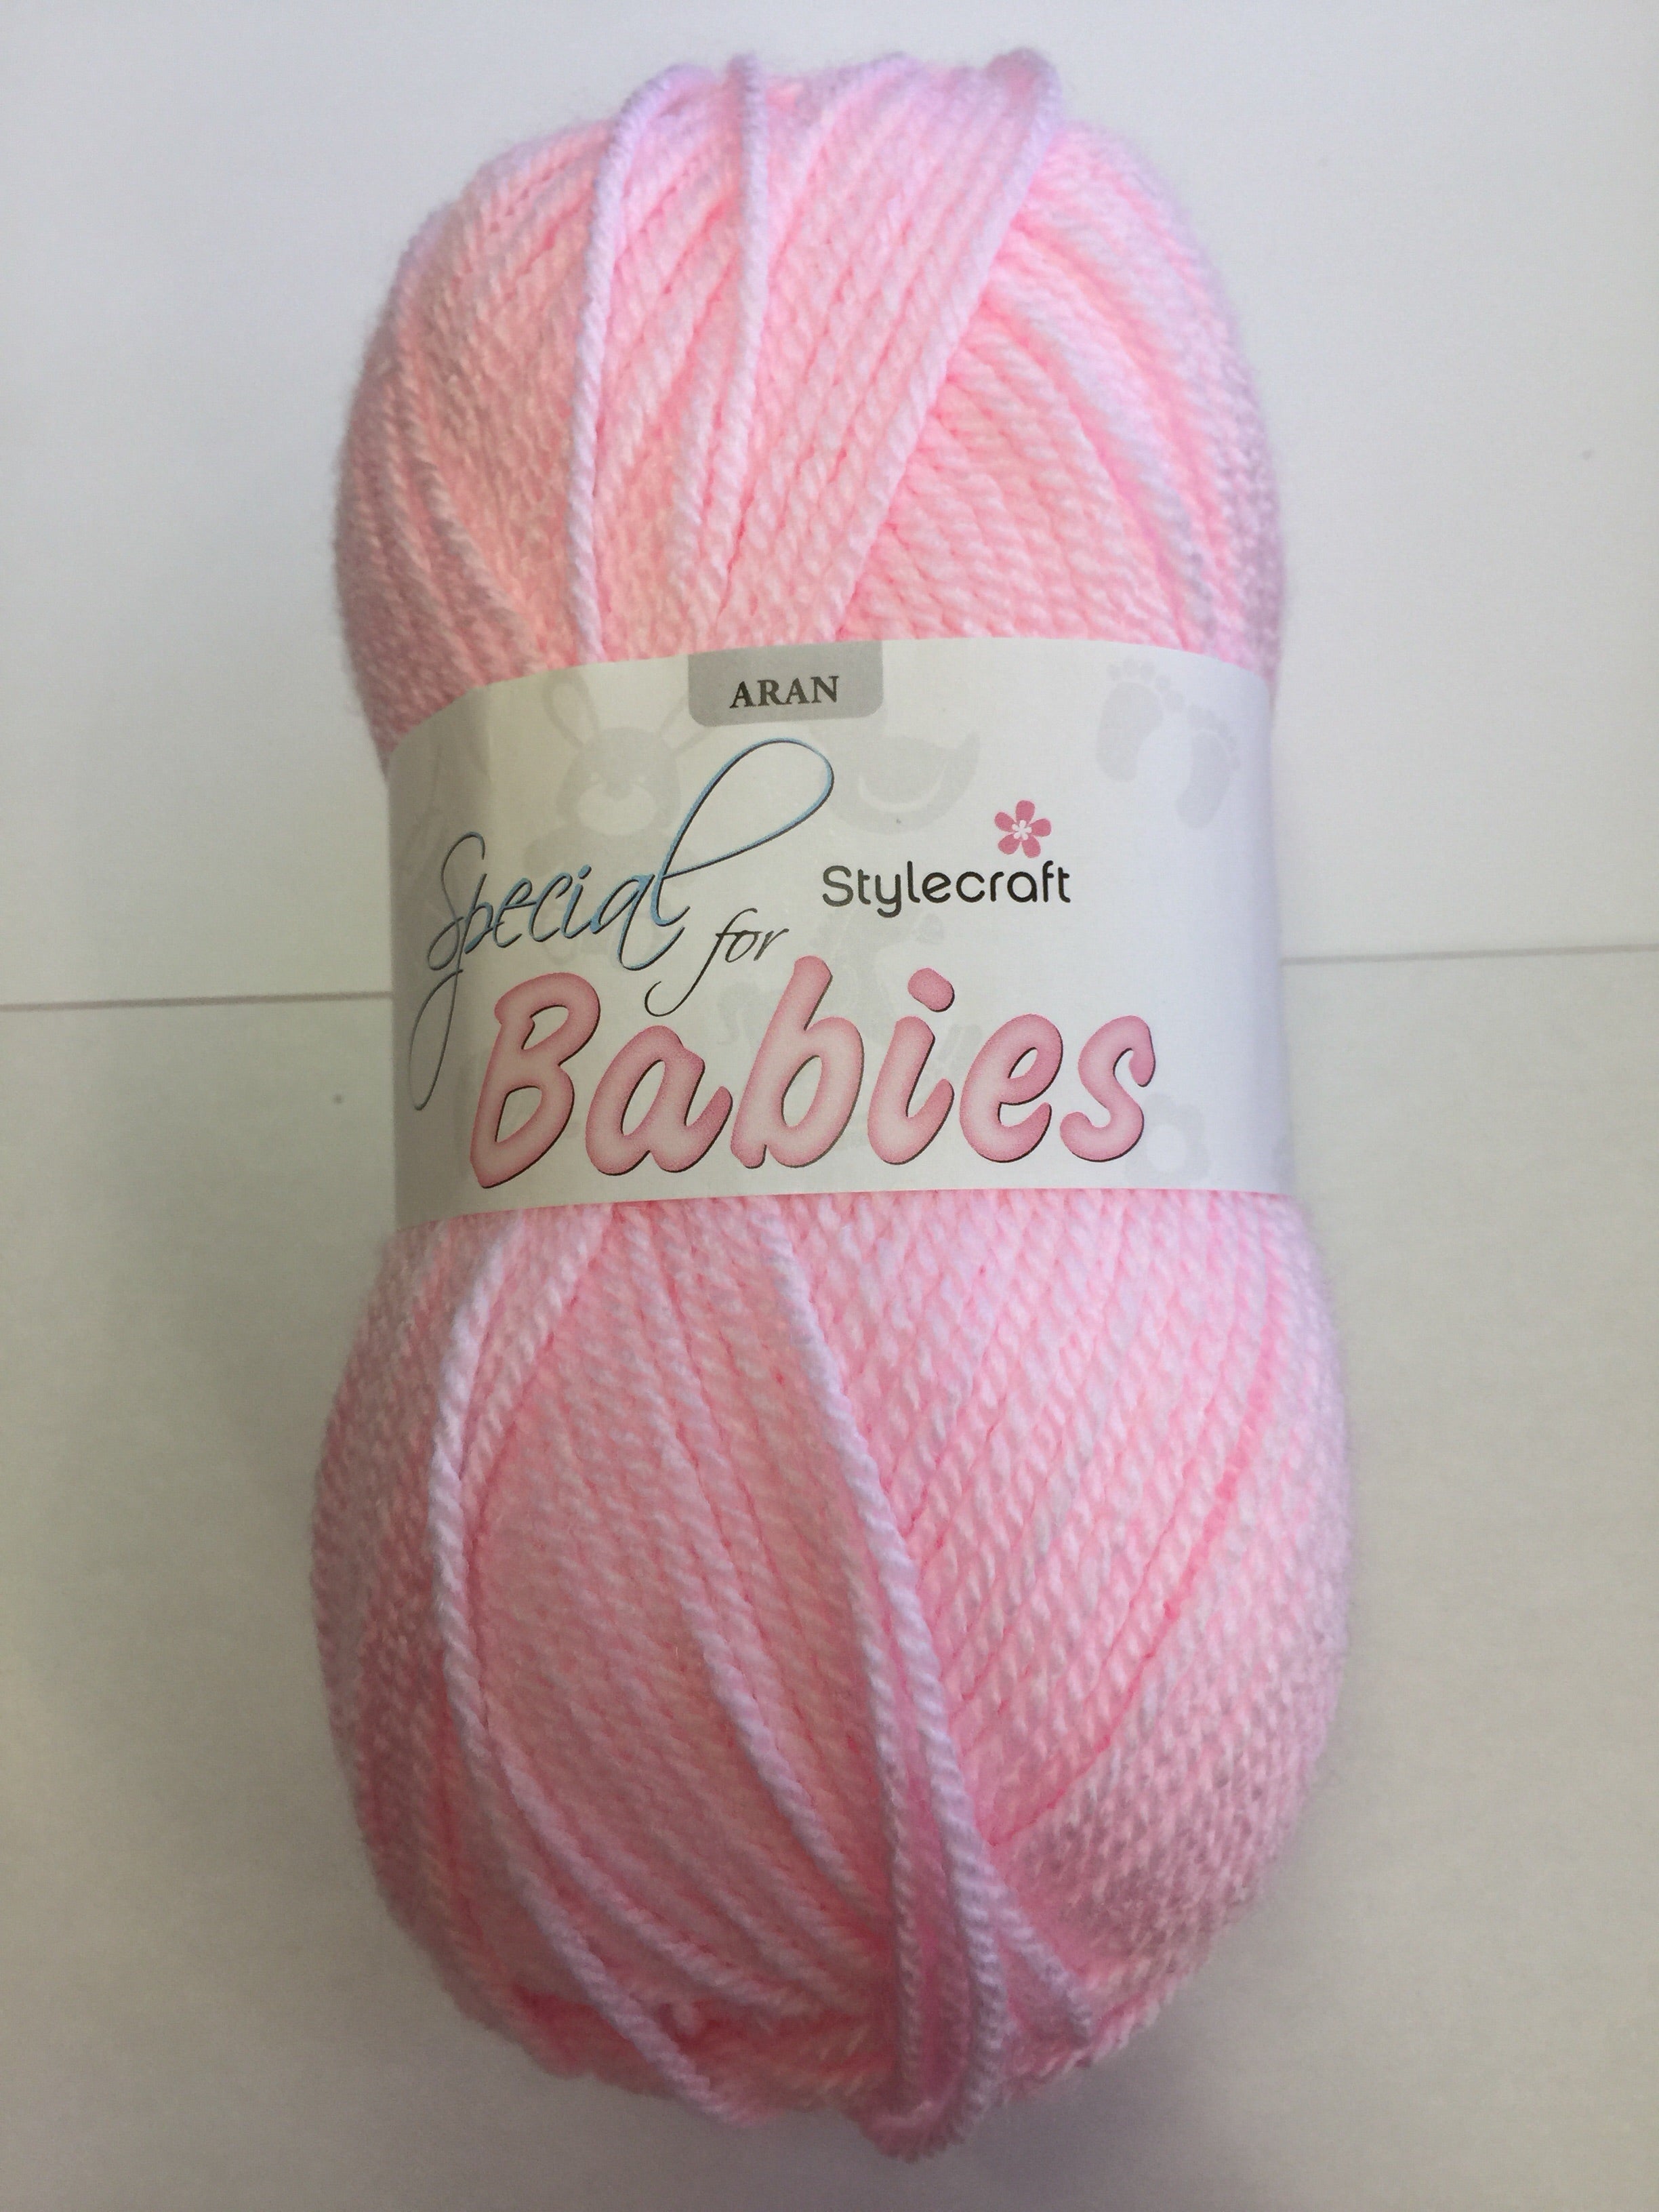 Stylecraft Special for Babies Aran 1230 Pink